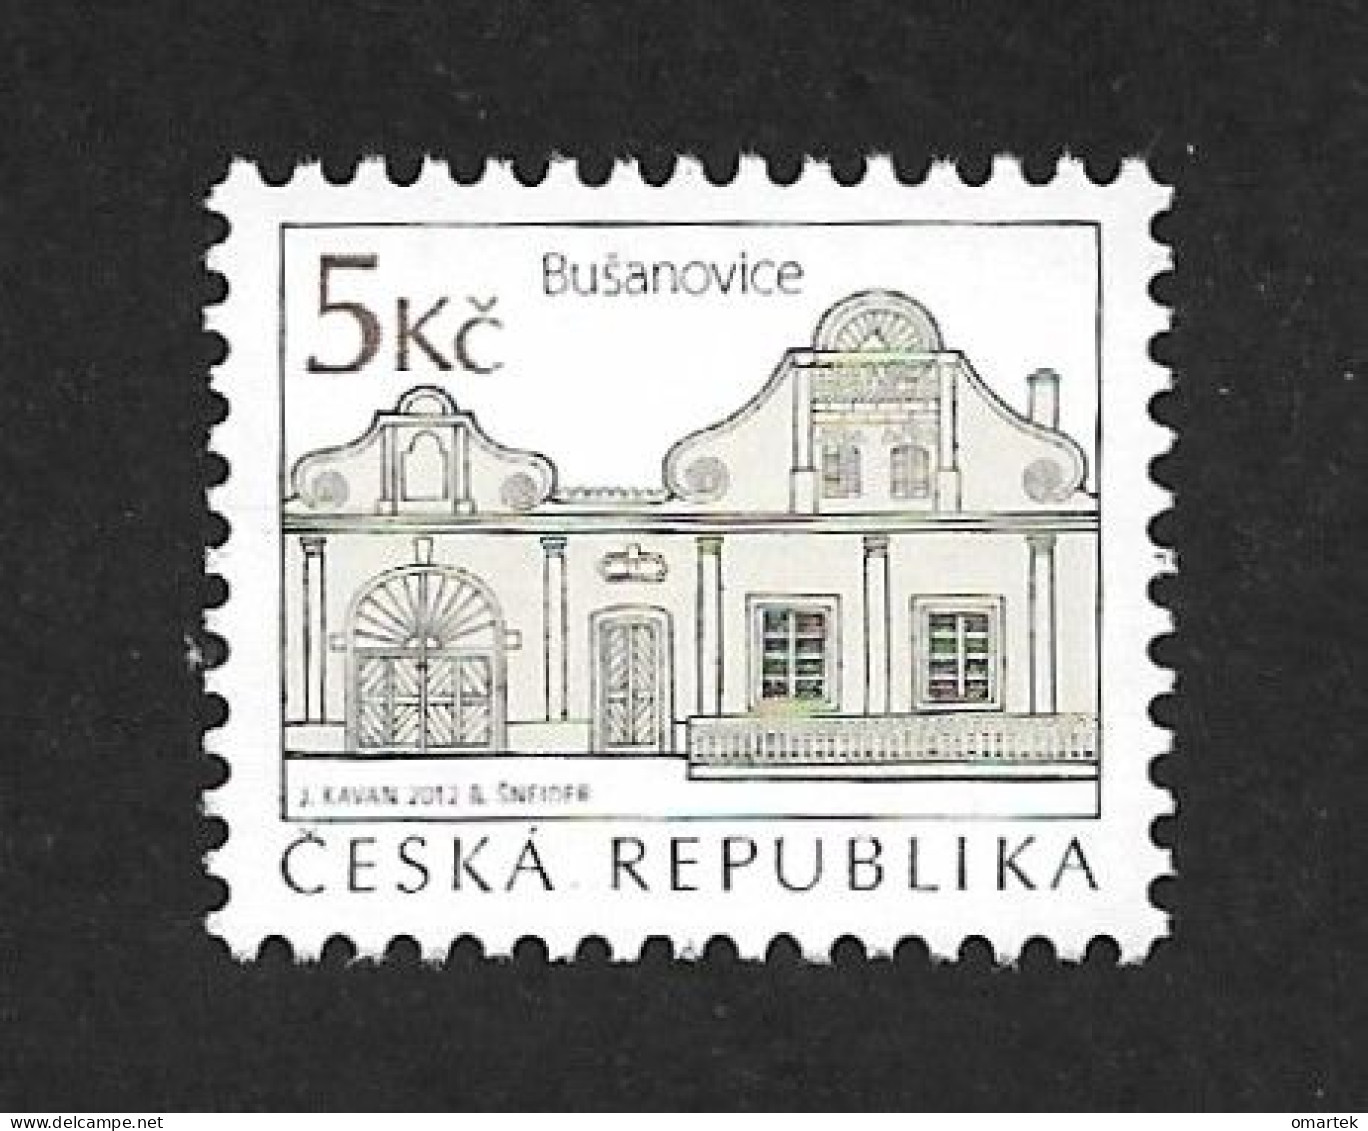 Czech Republic 2012 MNH ** Mi 753 Sc 3558 Folk Architecture - Busanovice.Tschechische Republik - Unused Stamps